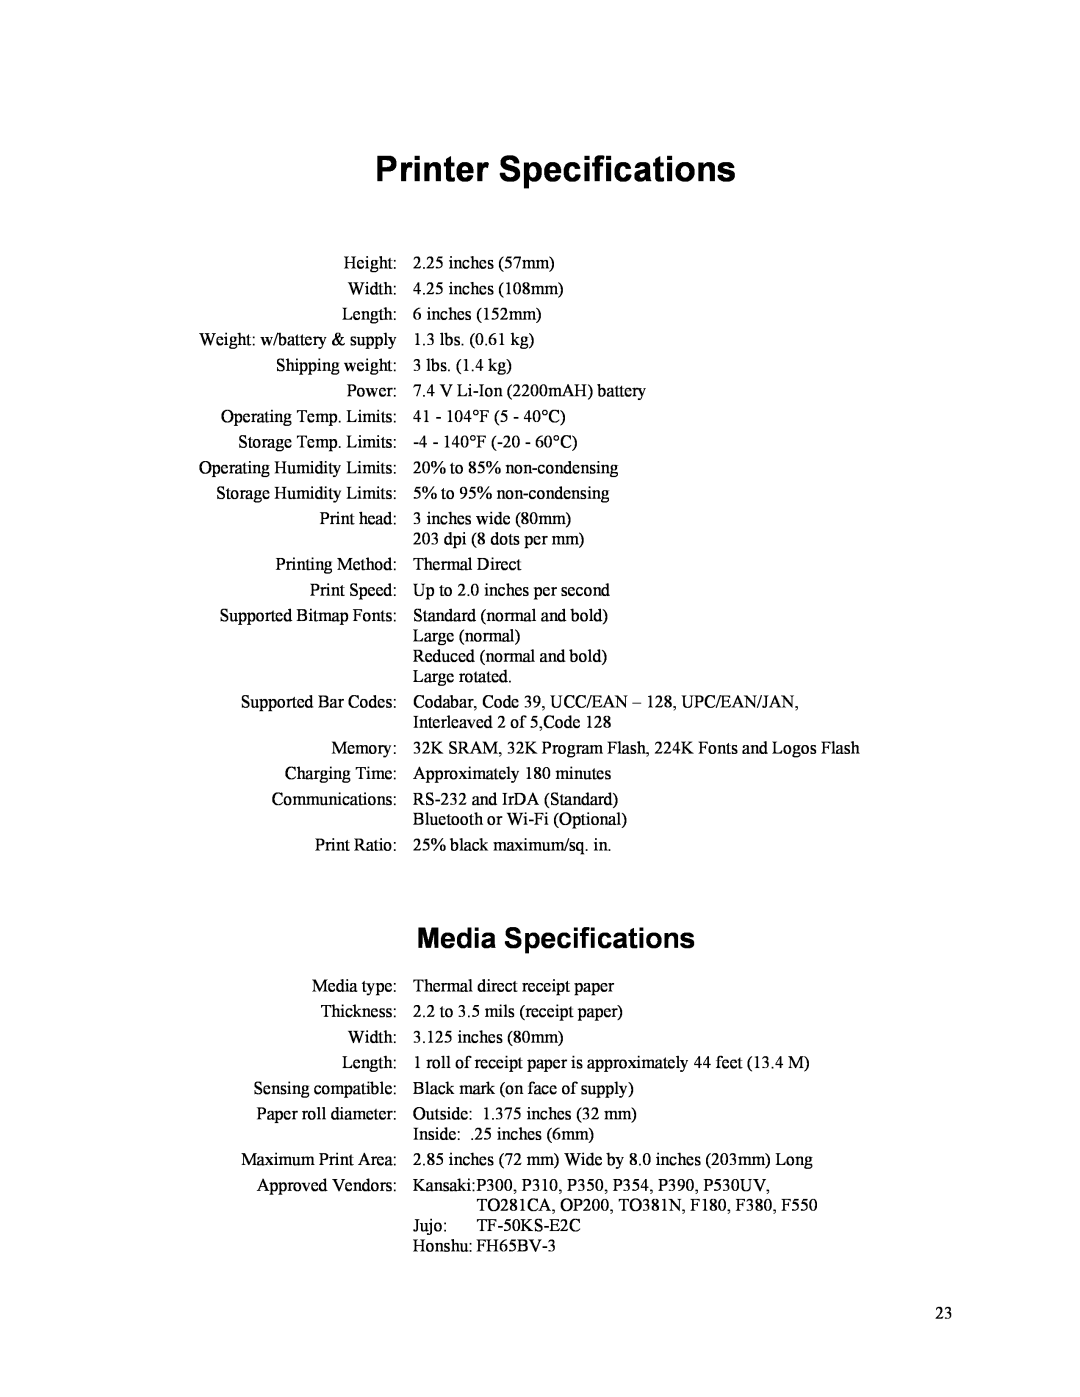 Printek Mt3-II manual Printer Specifications, Media Specifications 